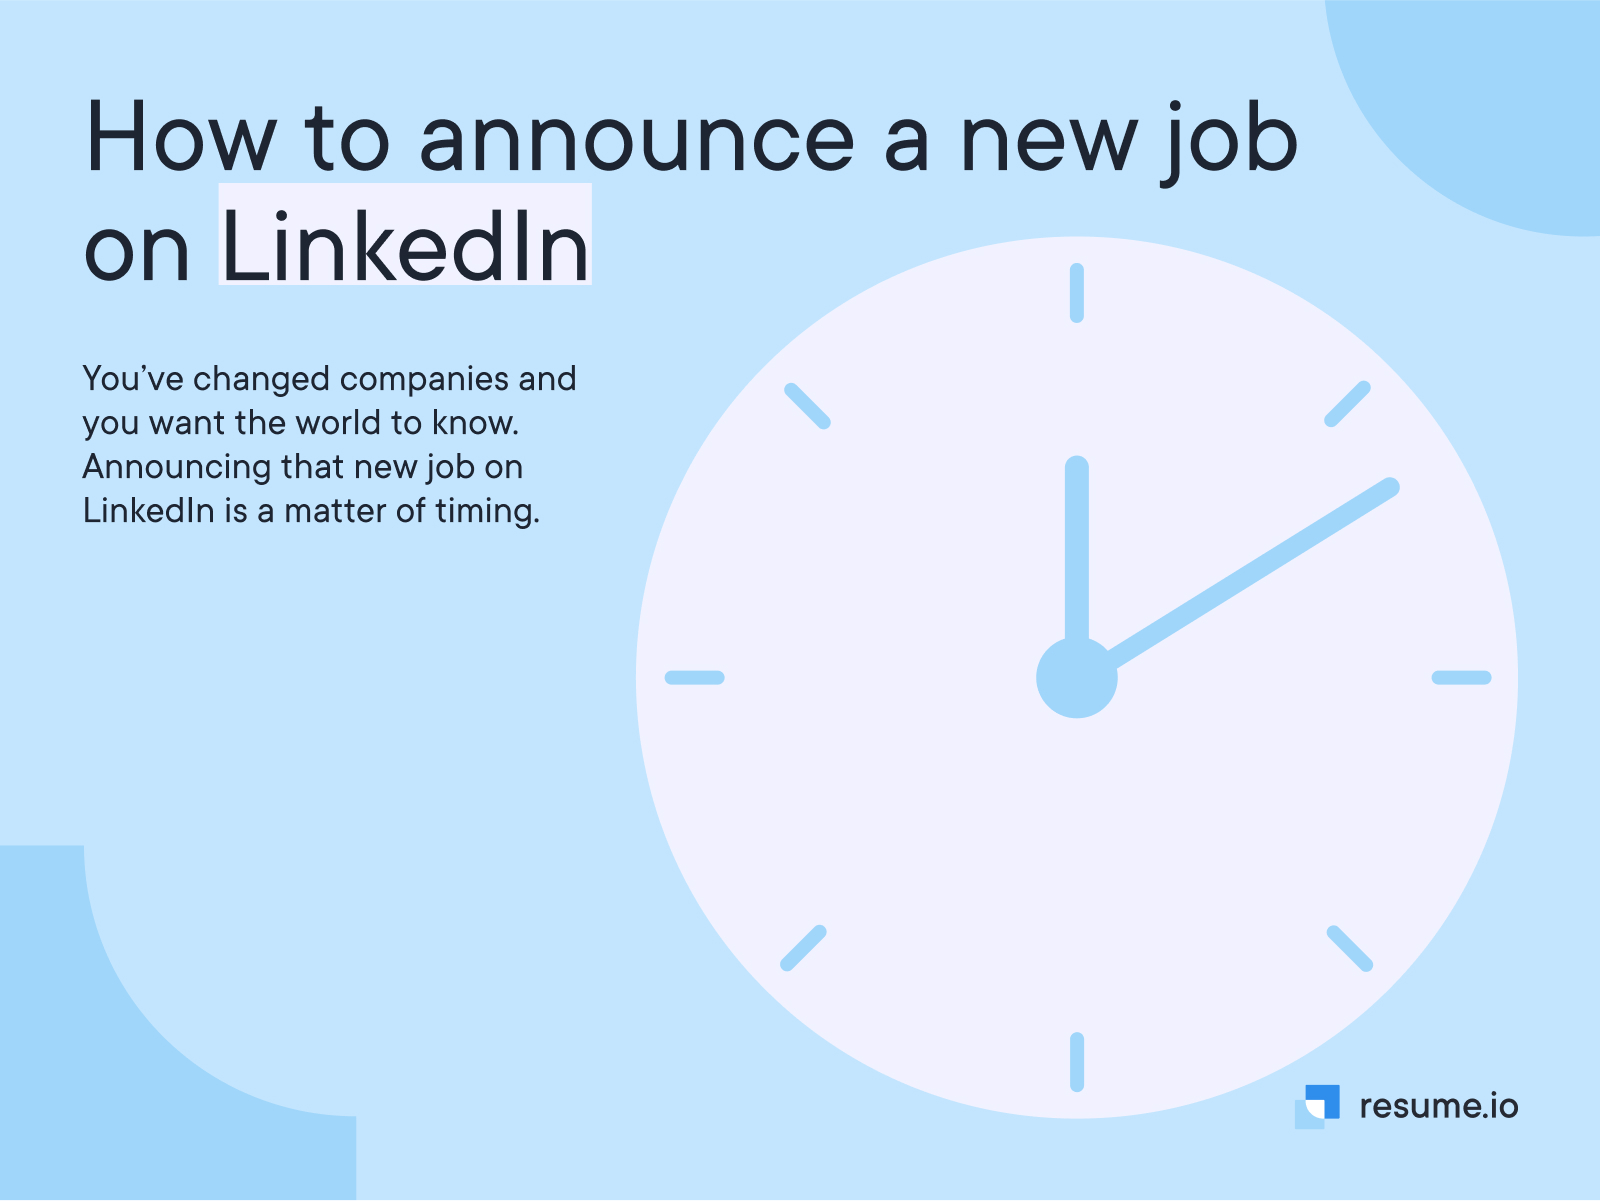 How to annouce a new job on LinkedIn